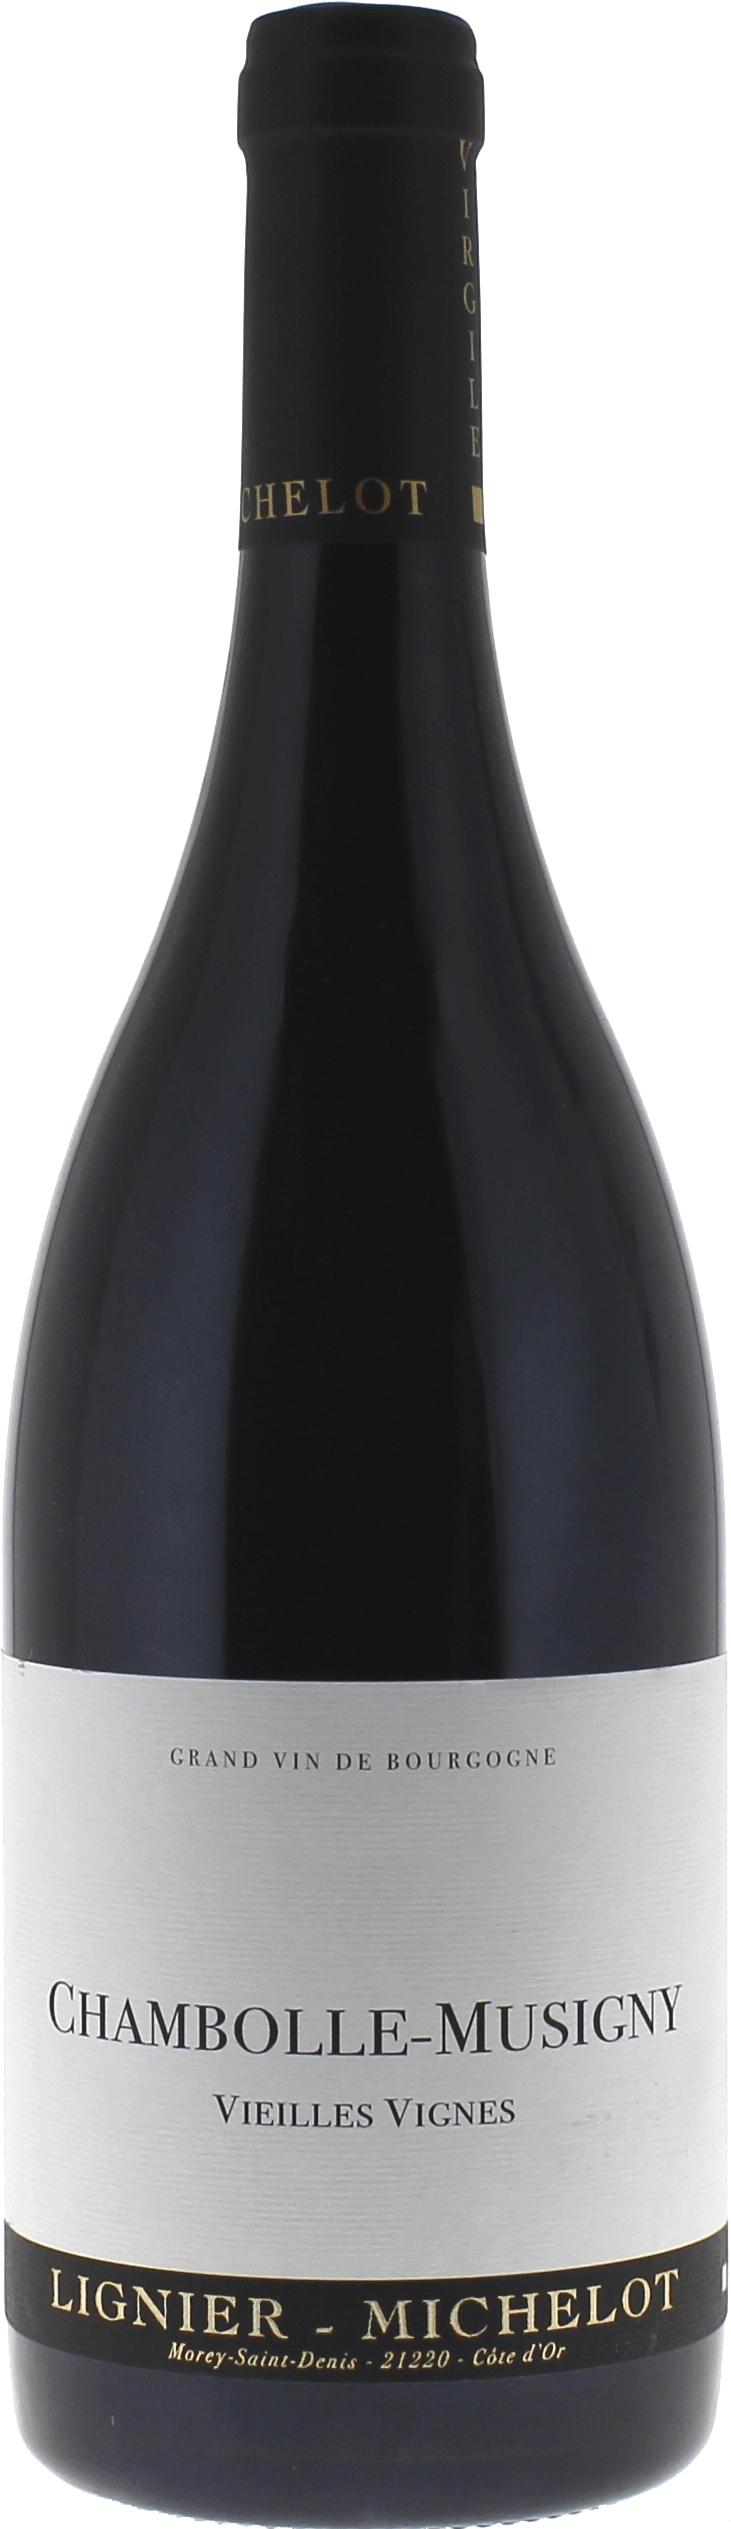 Chambolle musigny vieilles vignes 2017 Domaine LIGNIER MICHELOT, Bourgogne rouge